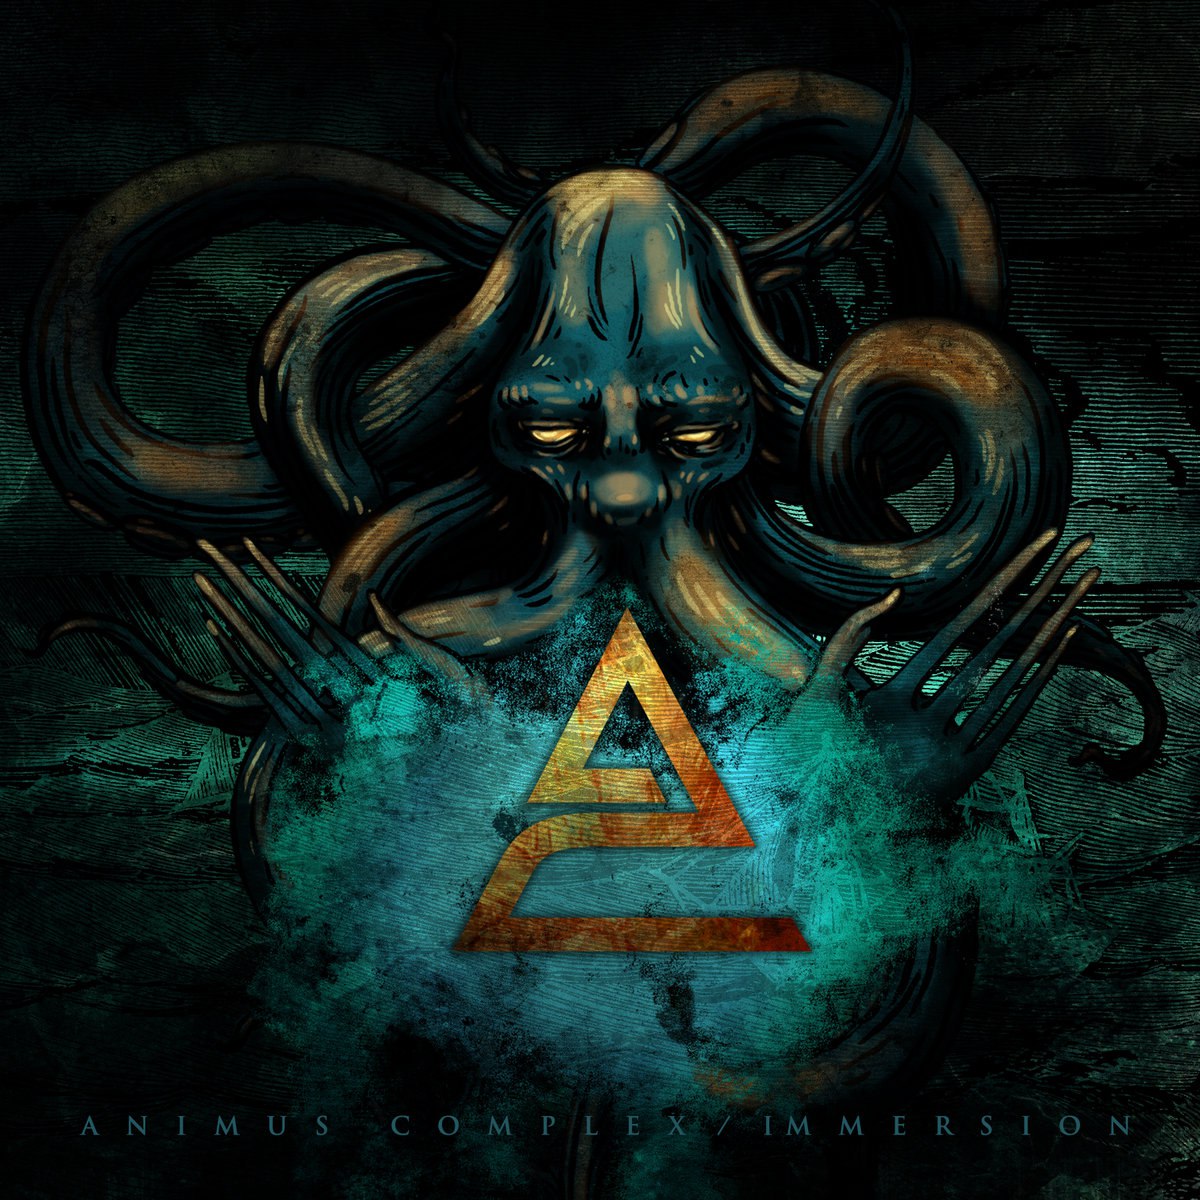 Animus Complex - Infinite Conclusions [Single] (2015) Album Info